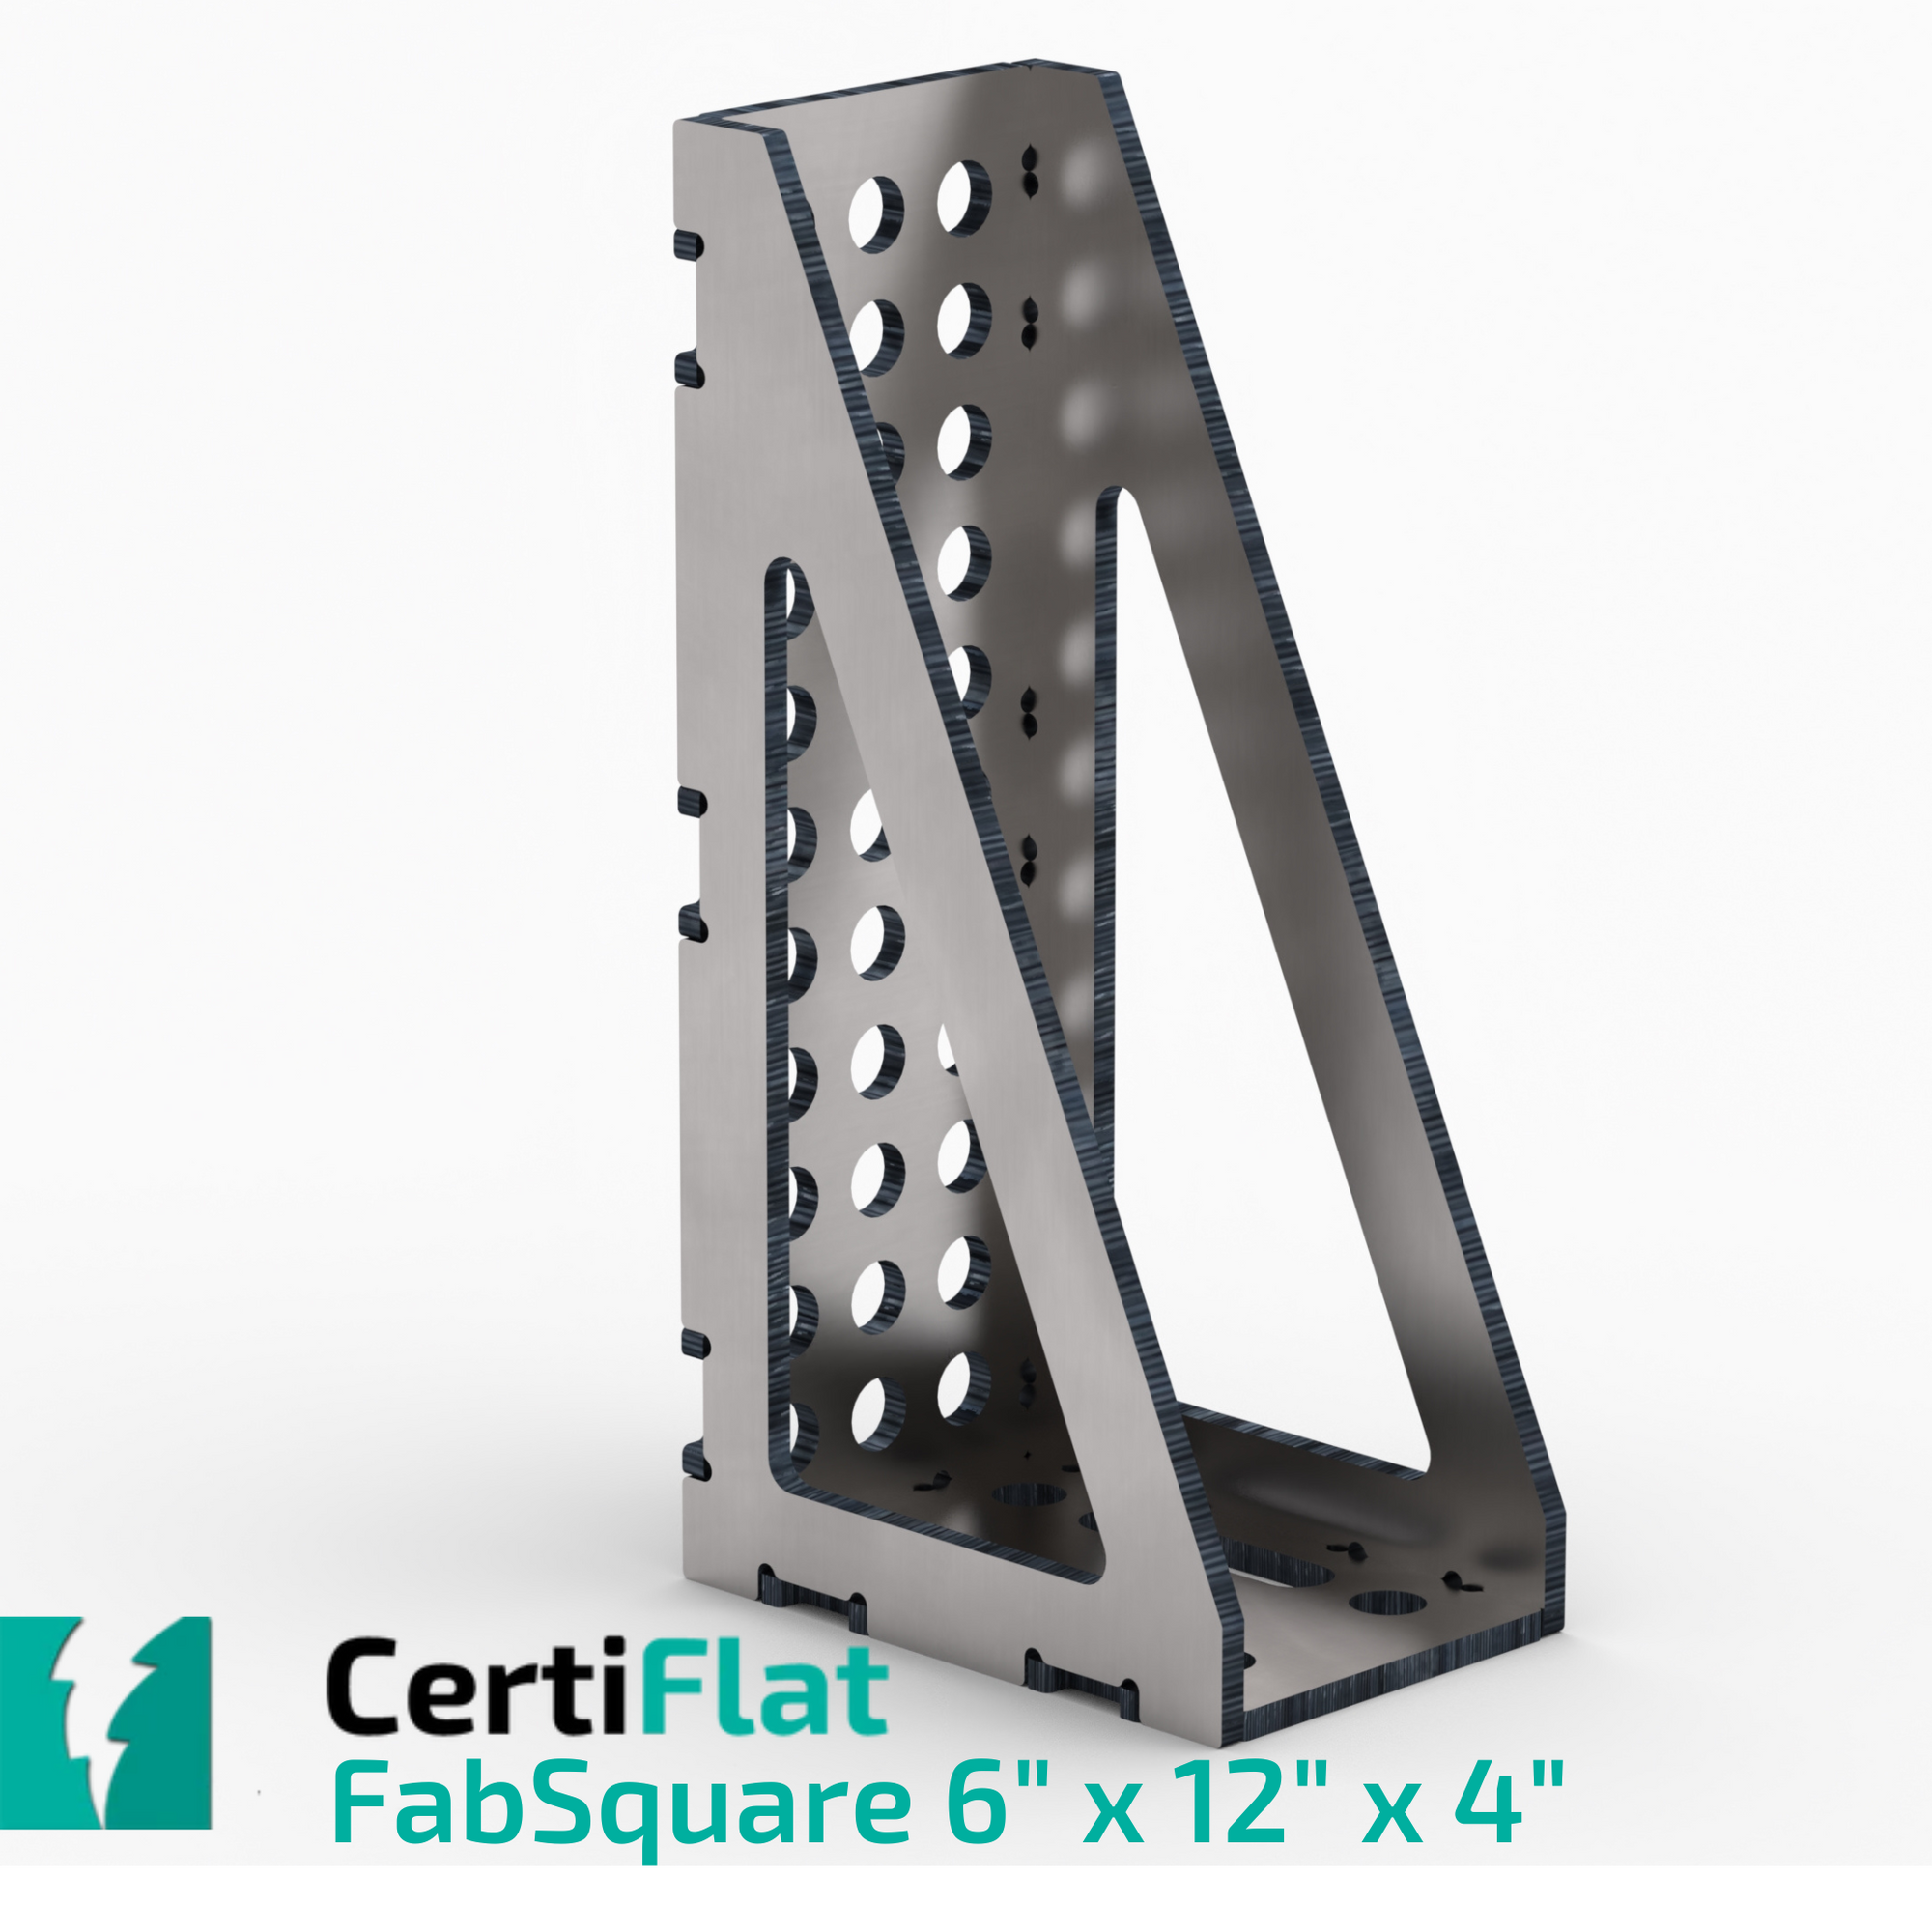 CertiFlat welding square FS61290-4 6"X12"X4" Wide U-Weld FabSquare Kit 90 Degree